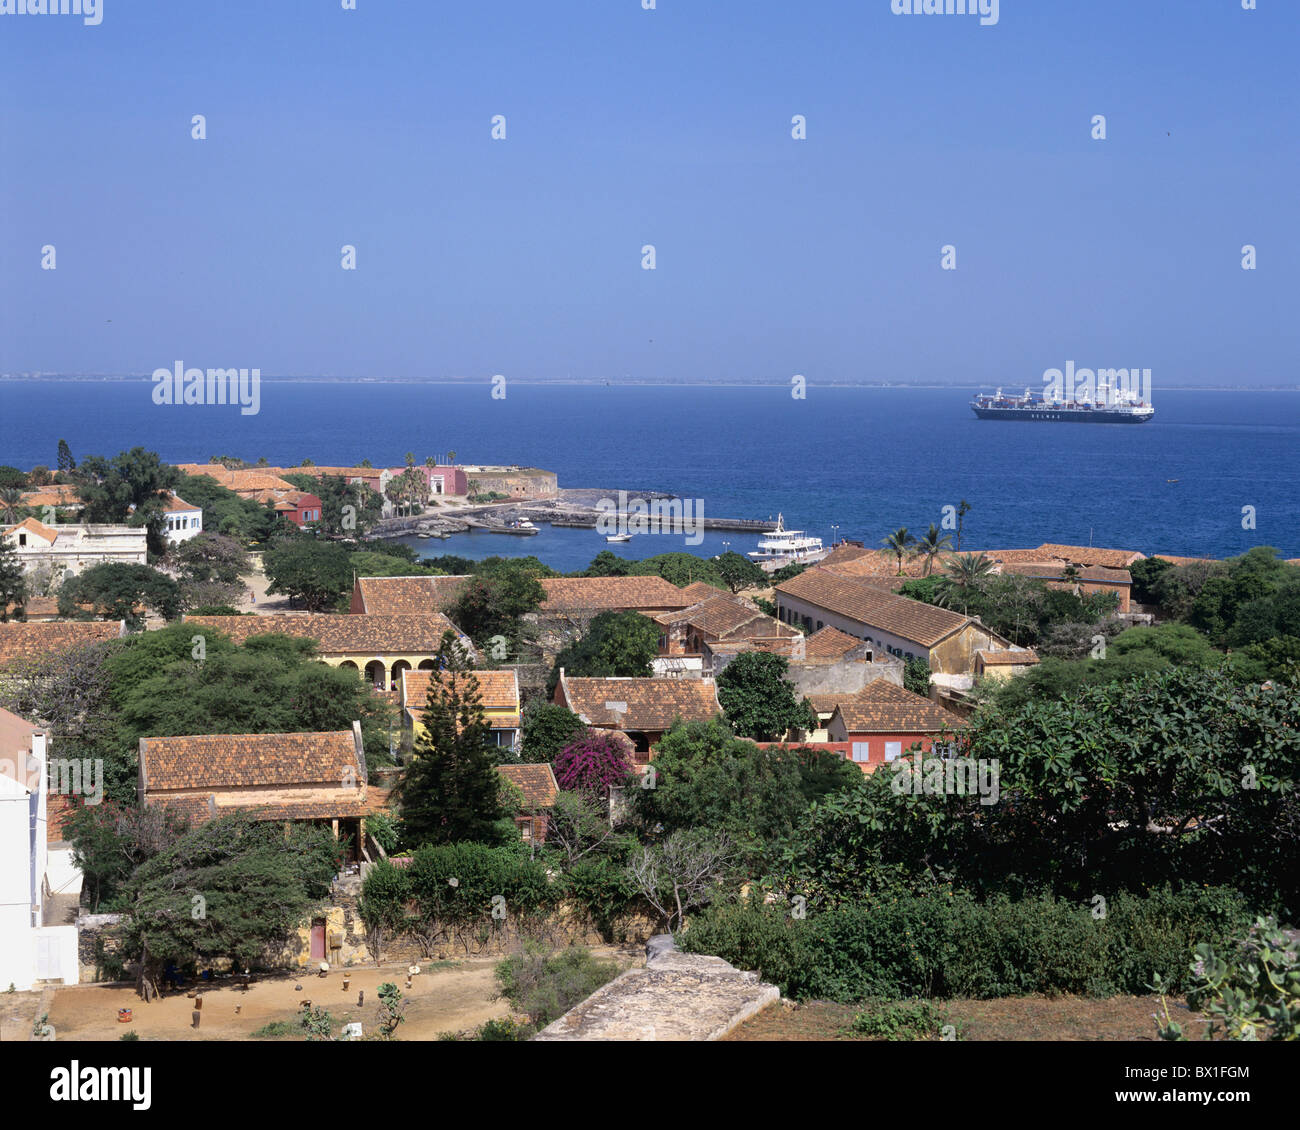 Africa coast ex schiavi case case Ile de Goree tetti panoramica mare nave Senegal Foto Stock